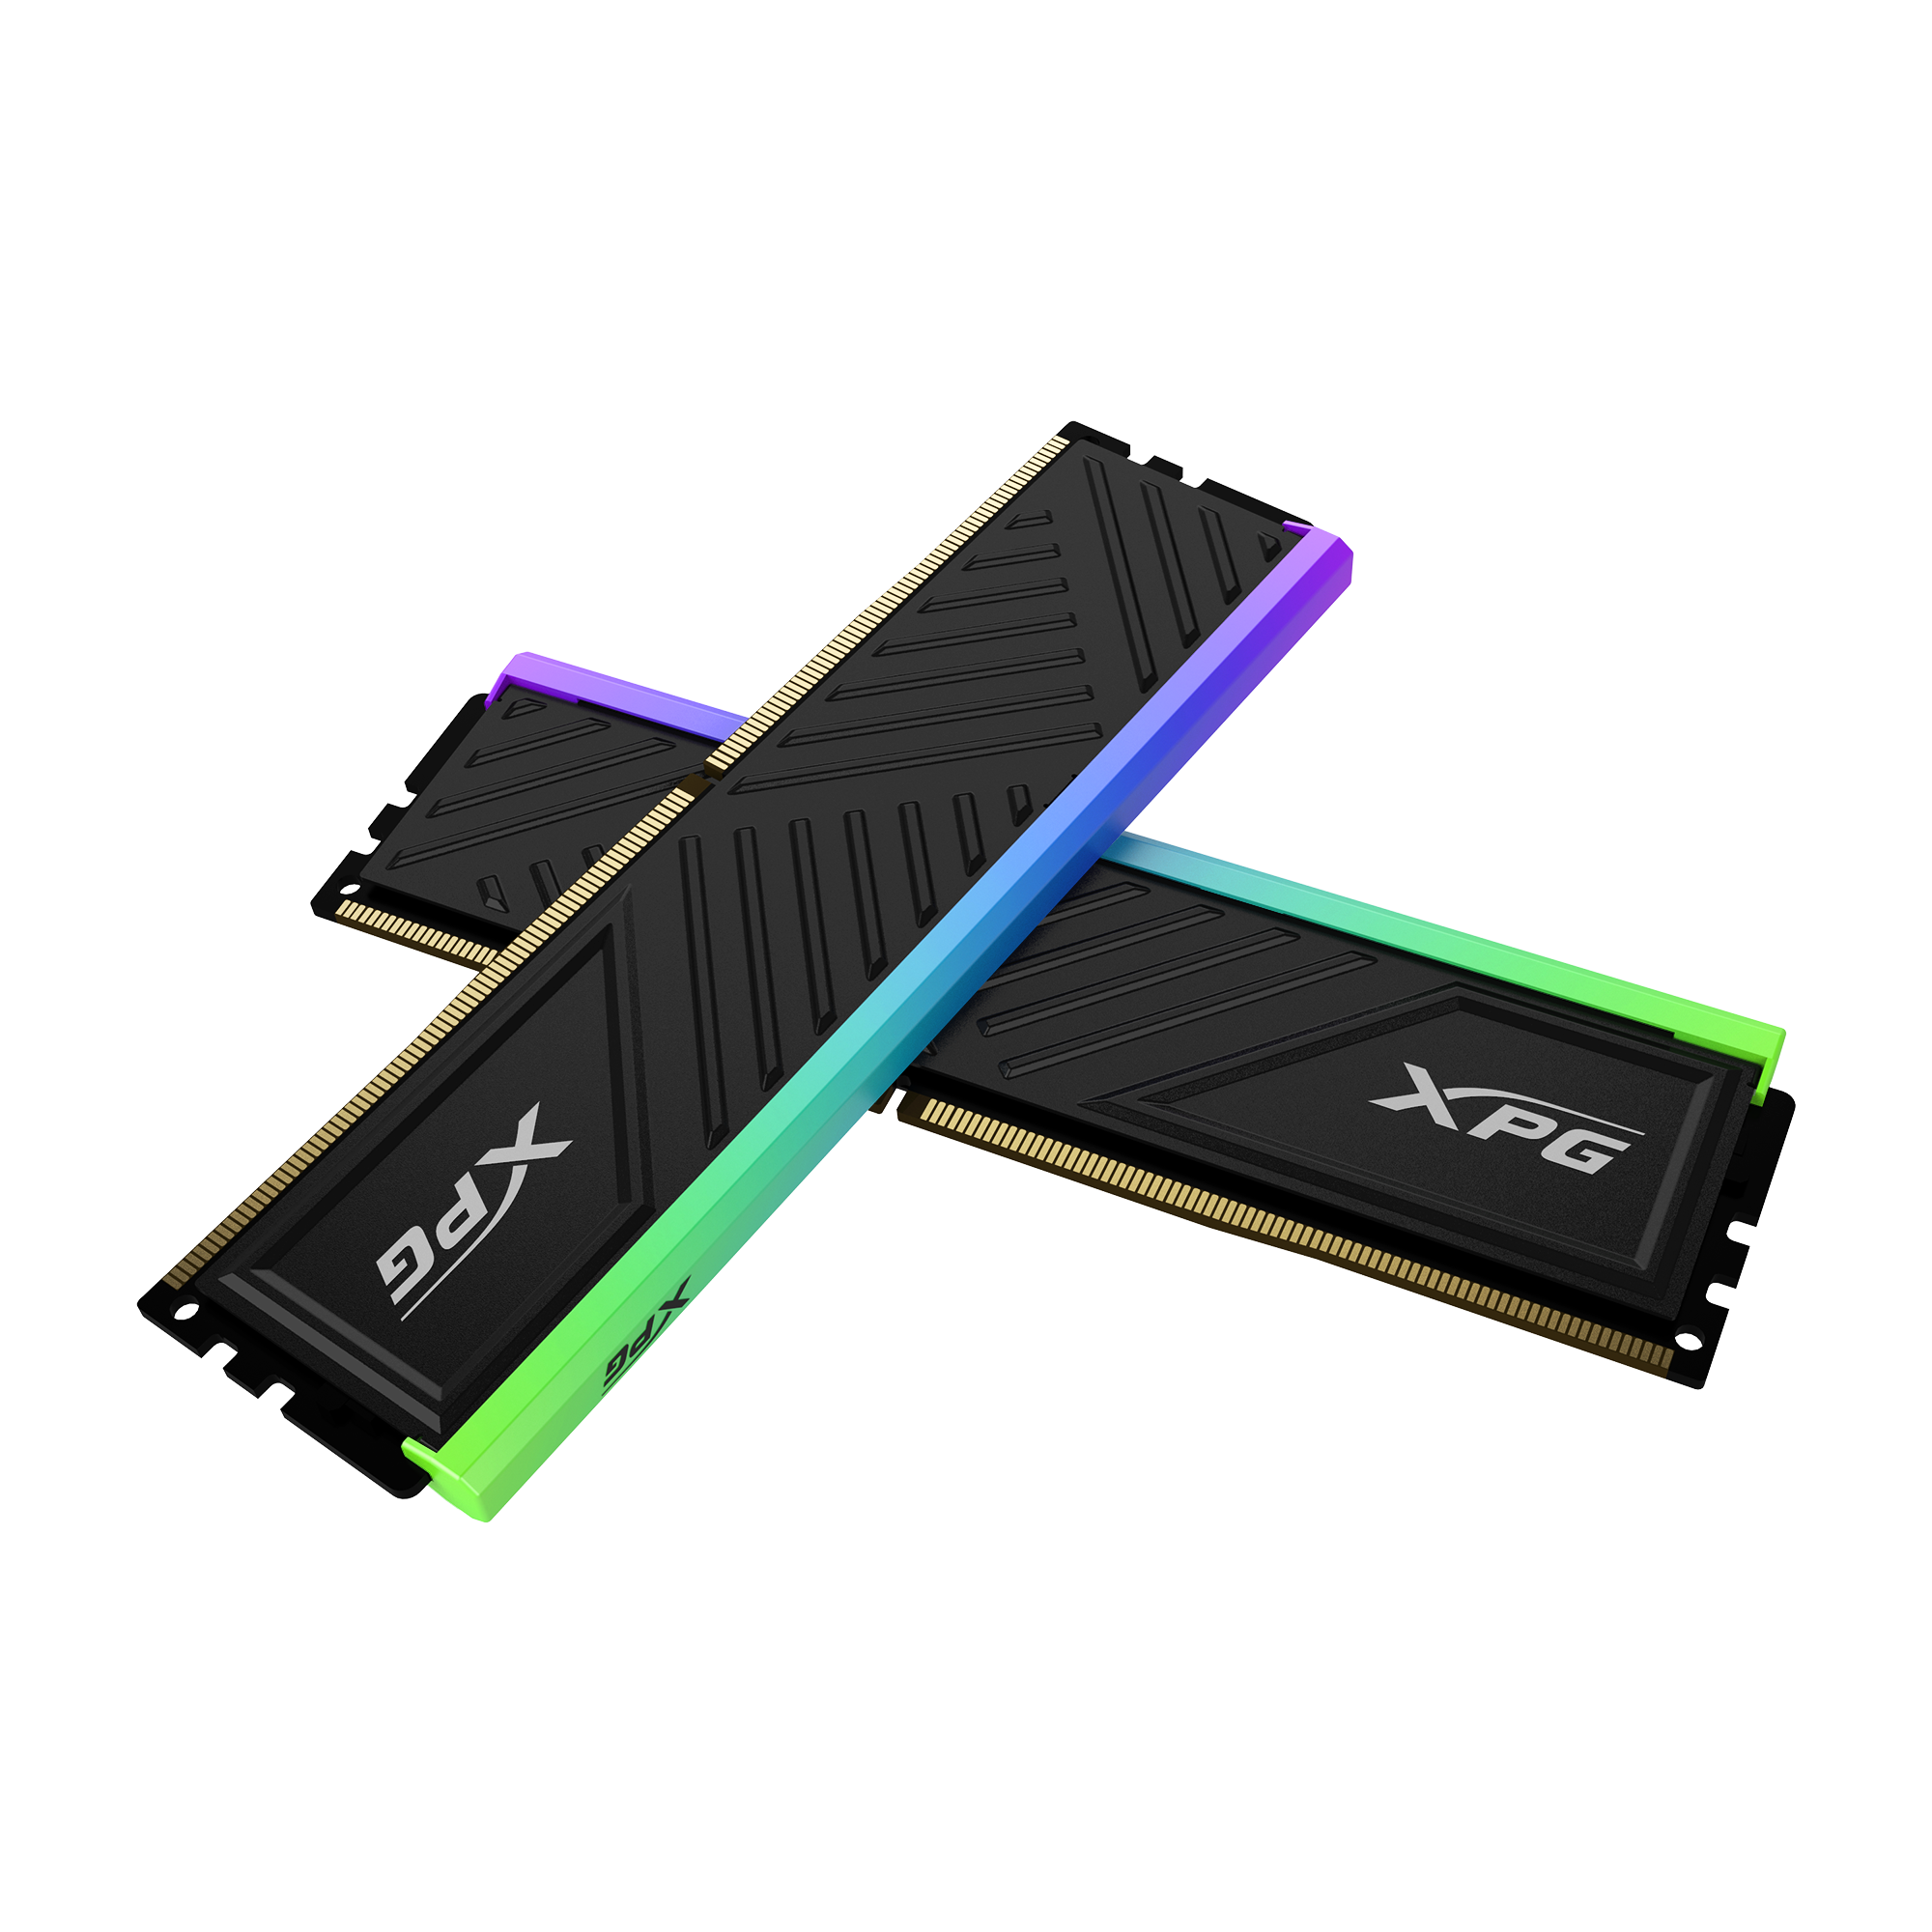 ADATA Spectrix D35G | DDR4 3600MHz CL18 RAM (Black)